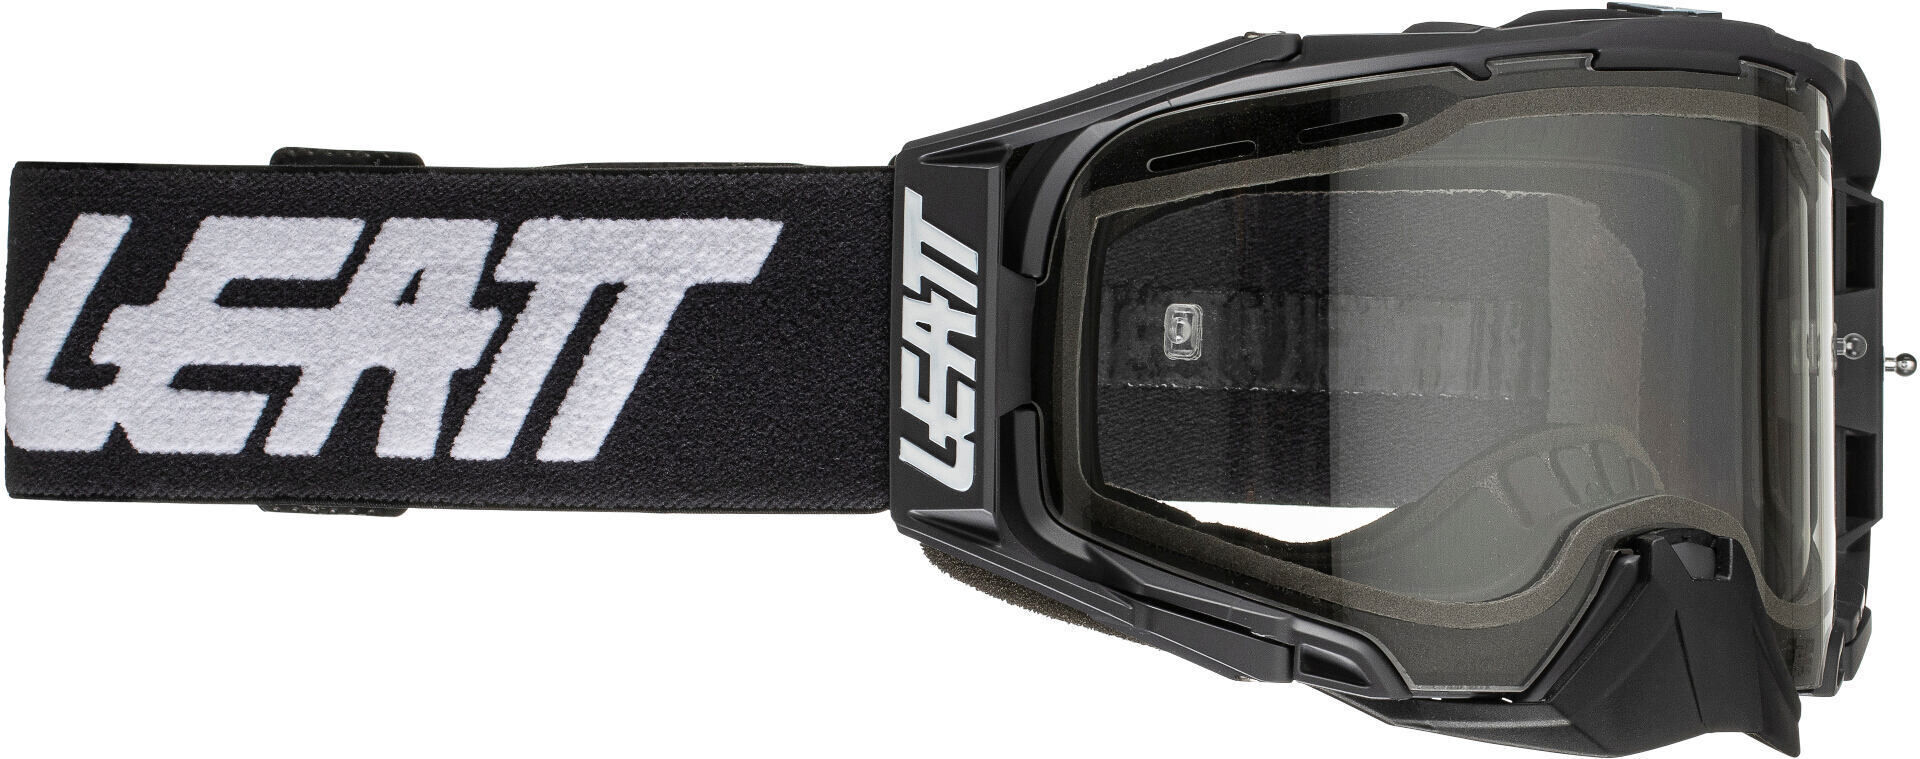 Leatt Velocity 6.5 Enduro Graphene Gafas de Motocross - transparente (un tamaño)